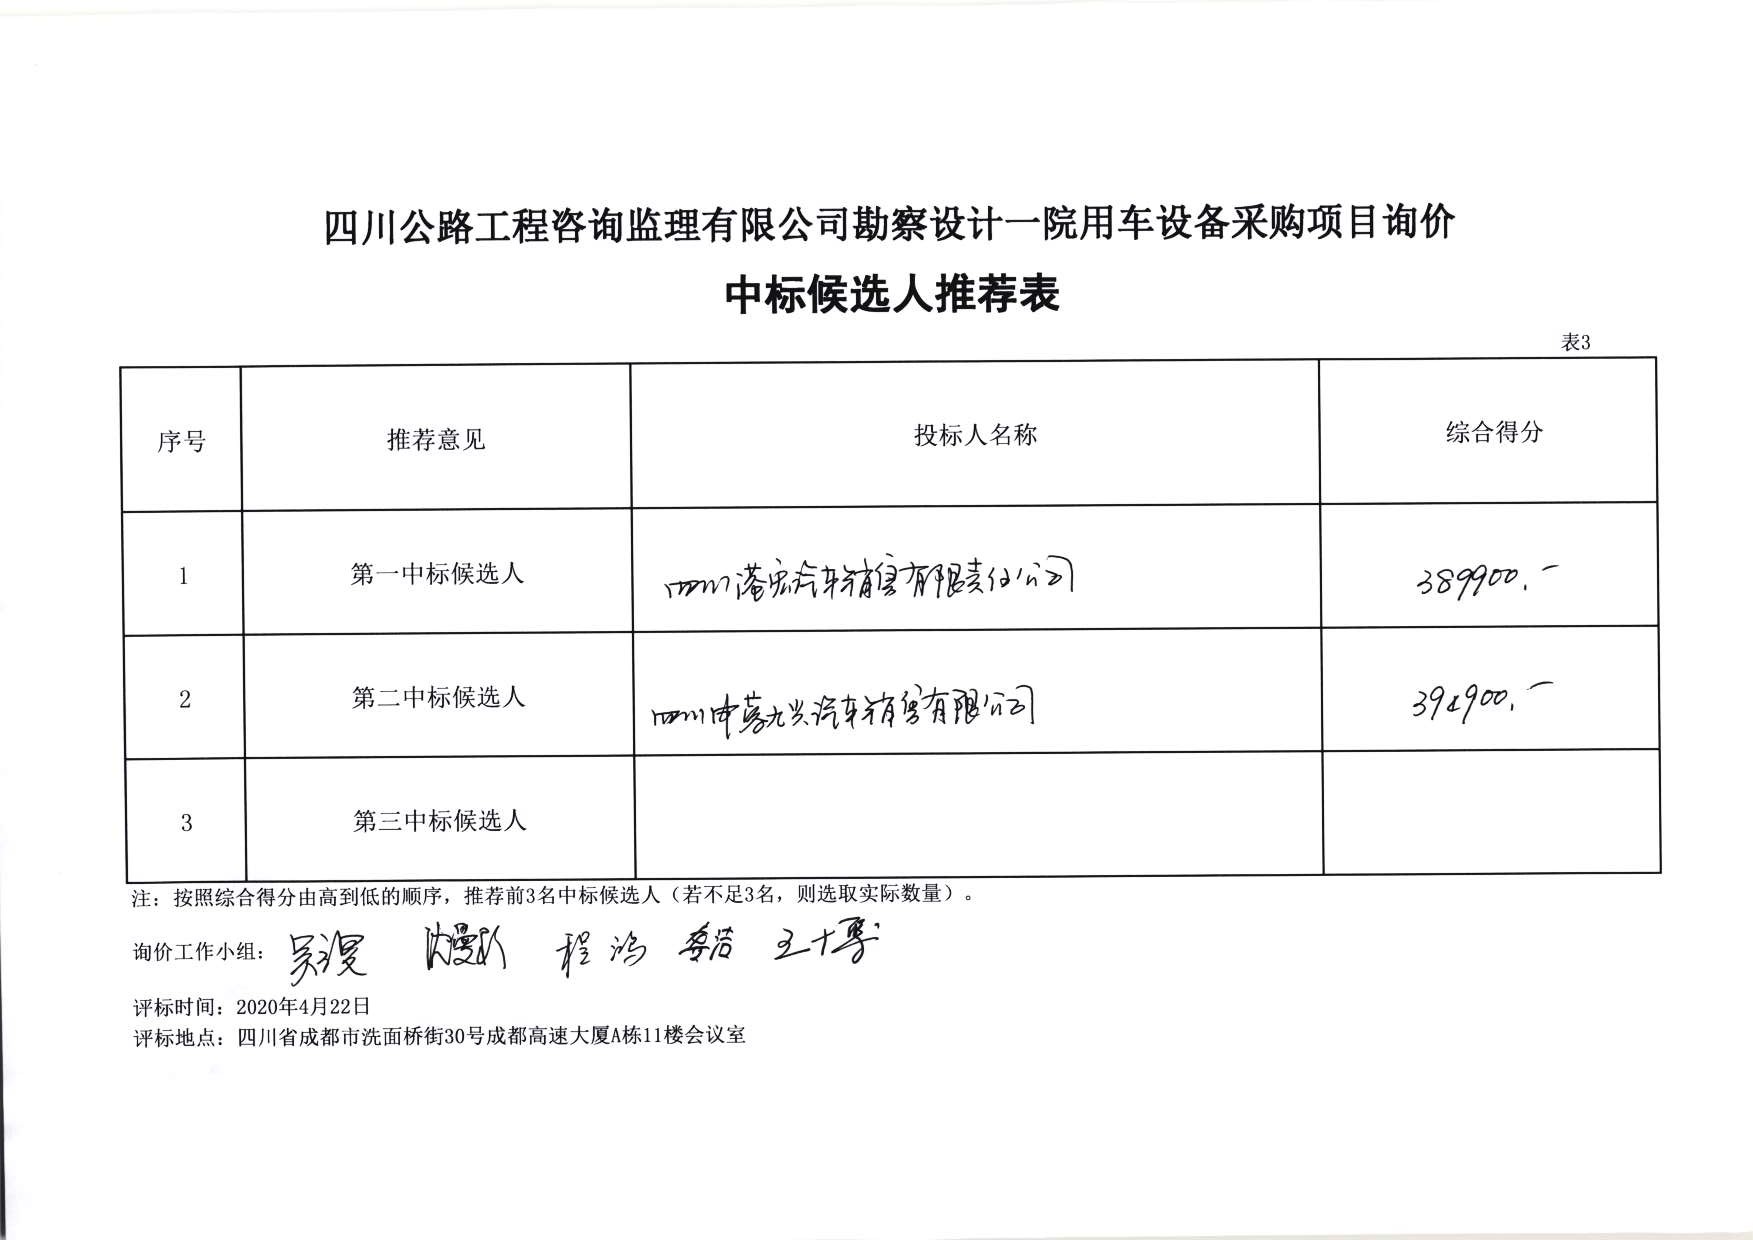 HTH华体会·(中国)官方网站勘察设计一院用车设备采购项目询价中标候选人推荐表.jpg